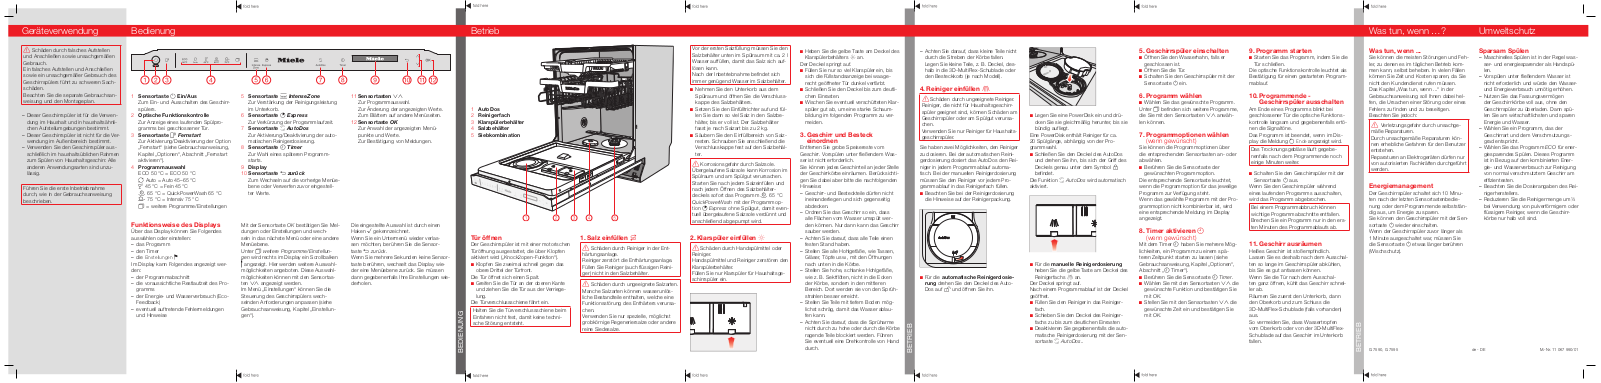 Miele G 7590 SCVi AutoDos operation manual